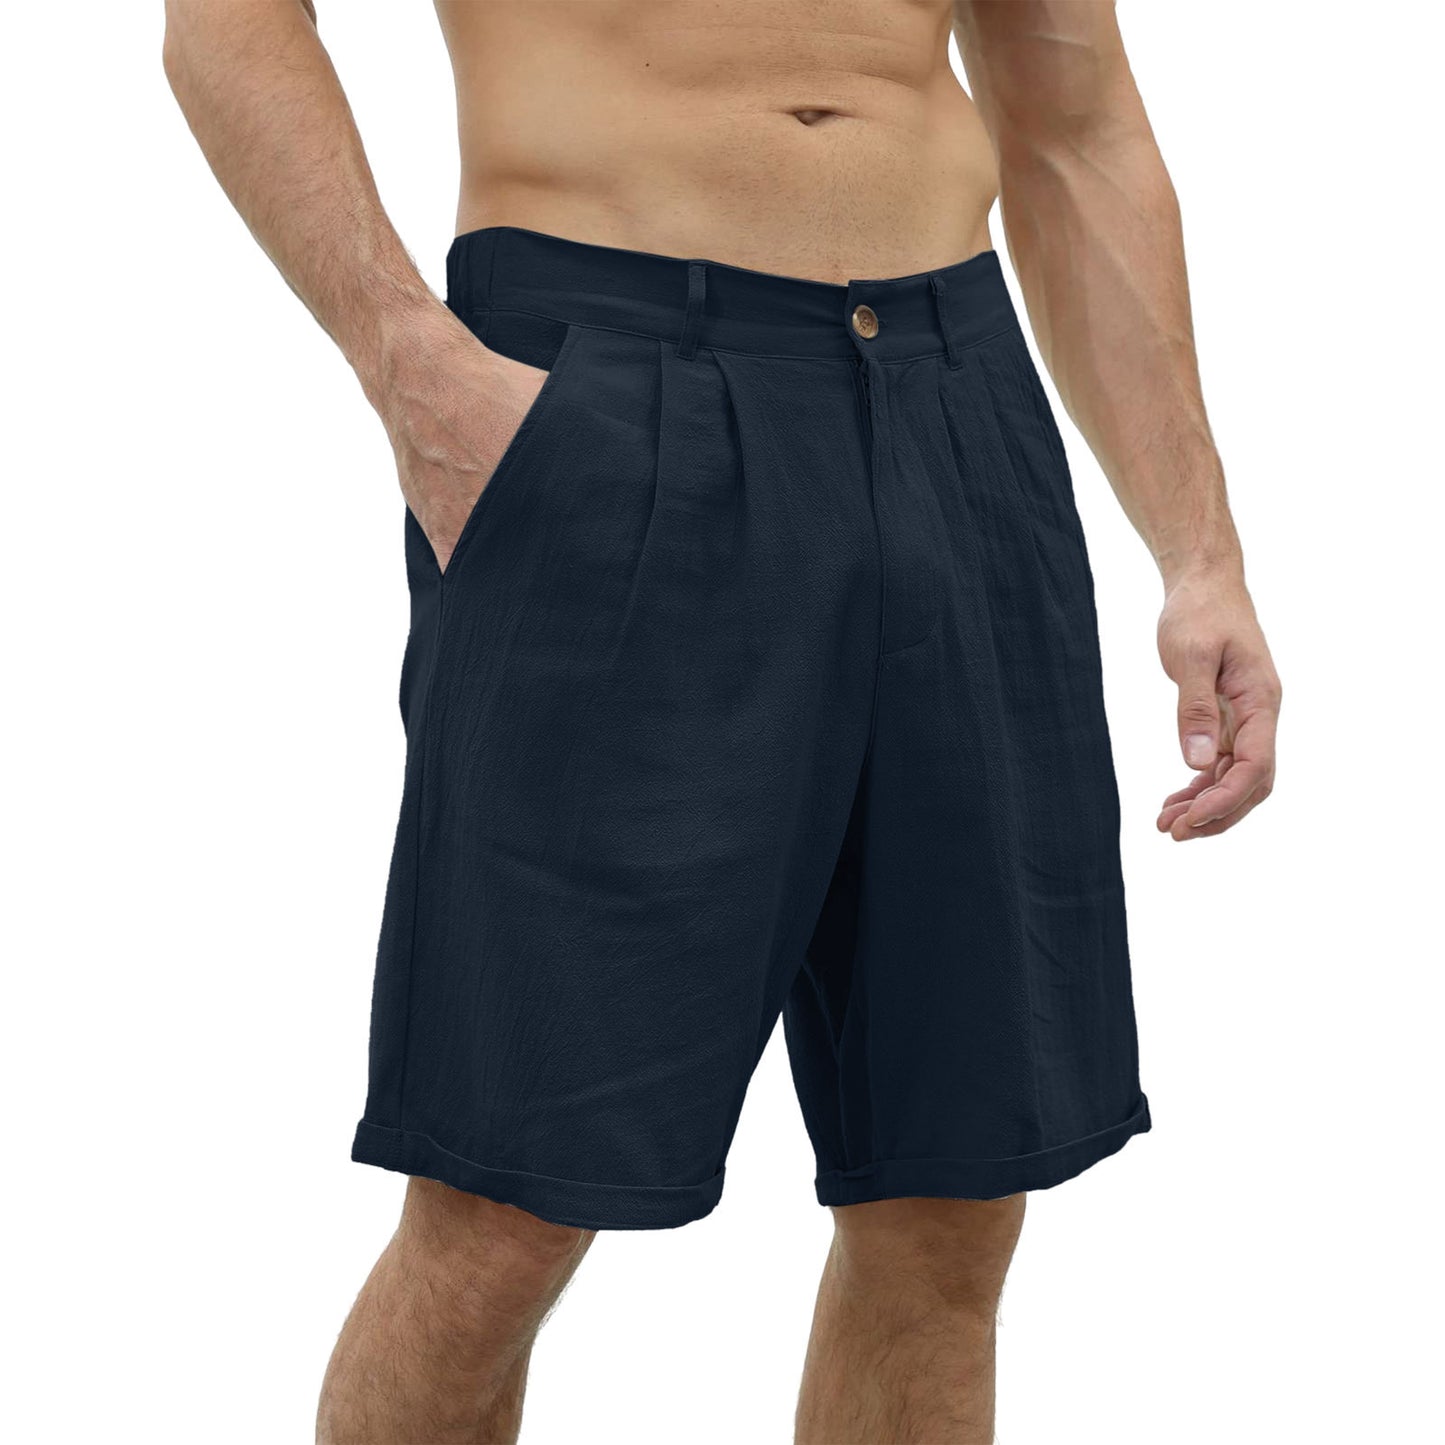 Men's Plain Linen Pocket Beach Shorts